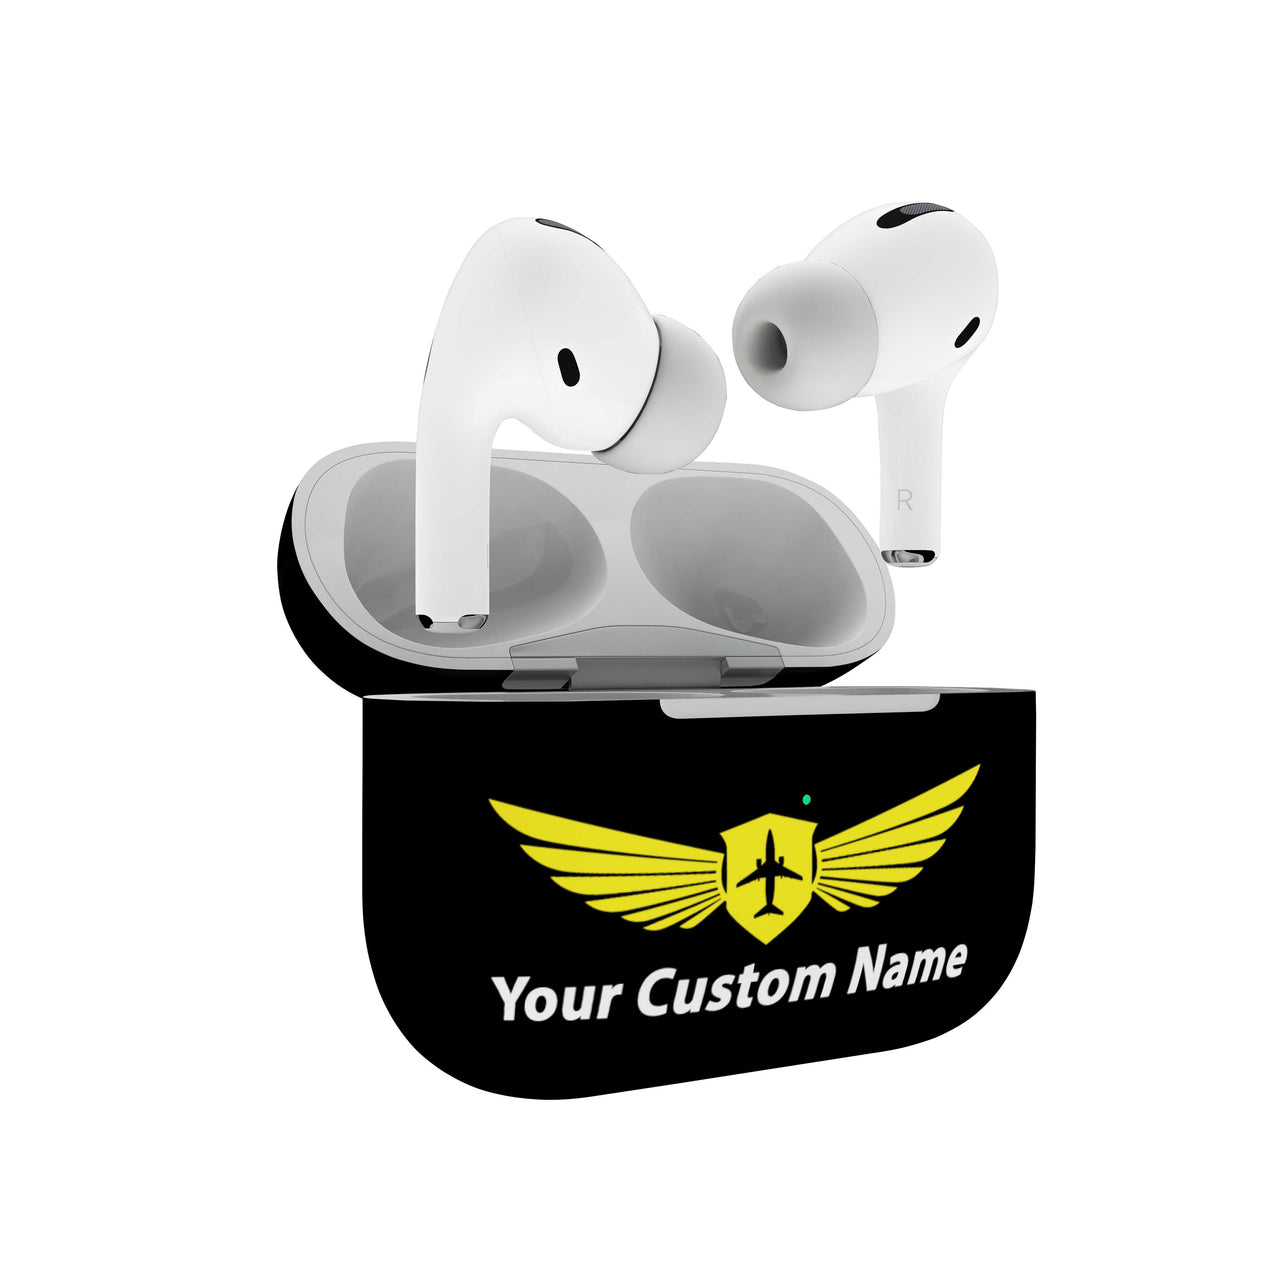 Custom Name (Badge 2) Designed Airpods "Pro" Cases